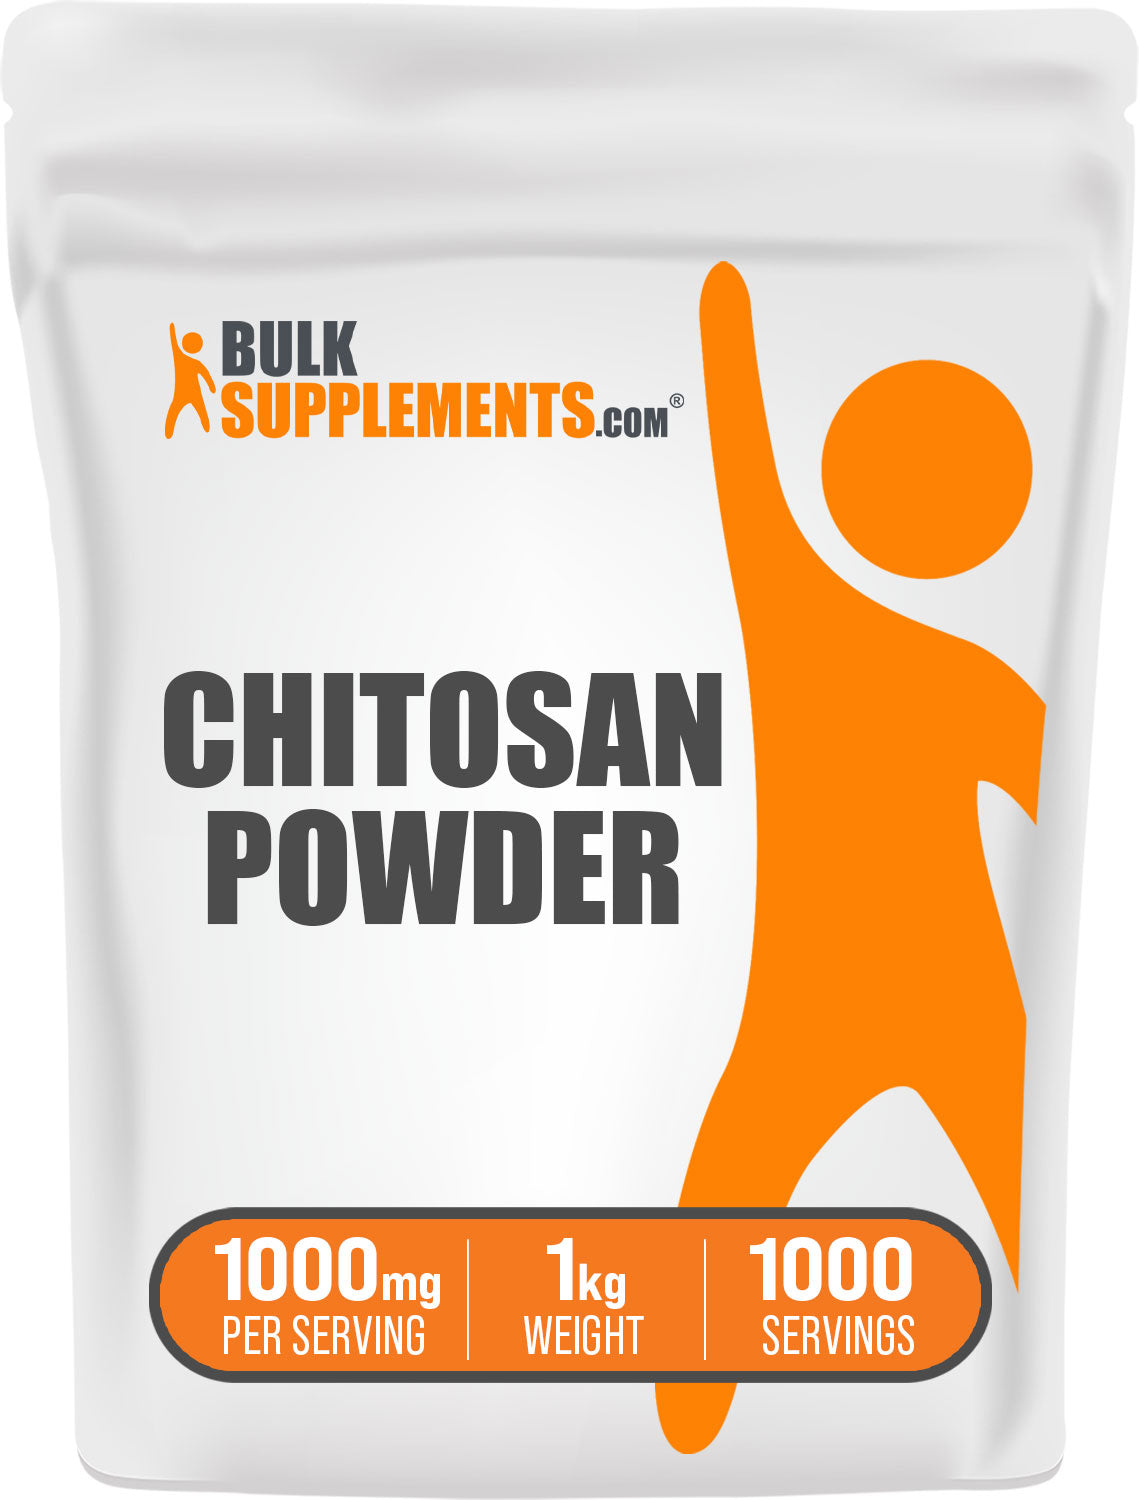 1kg chitosan supplements